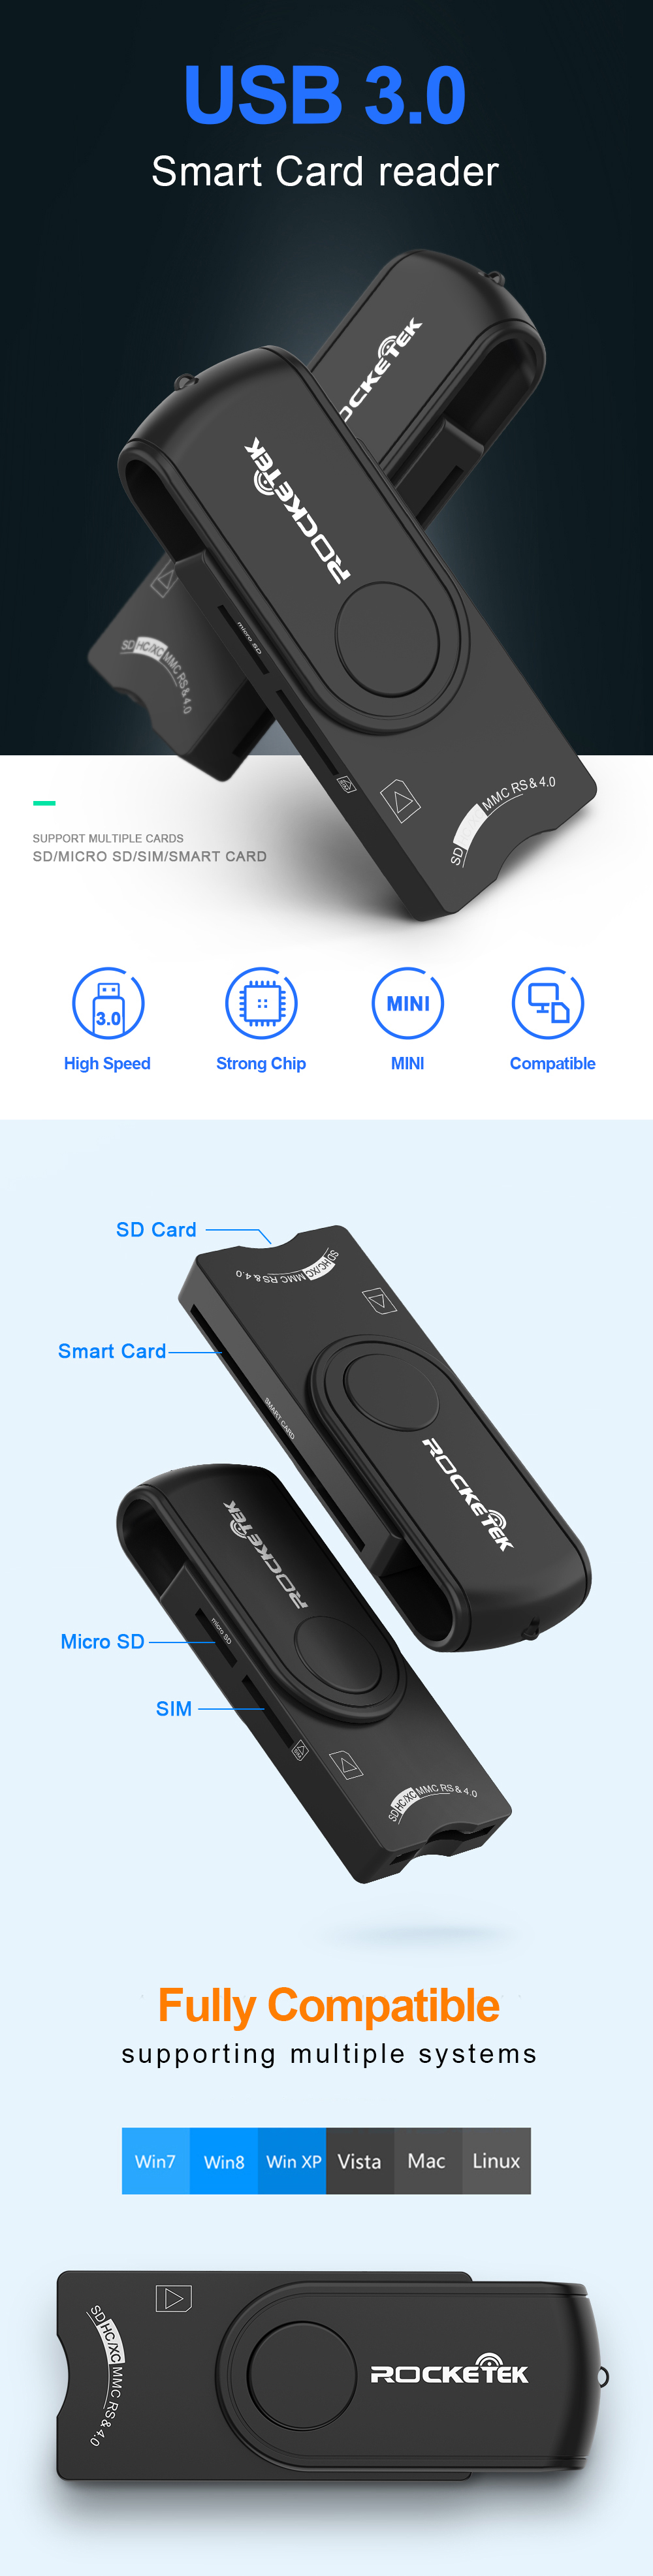 Rocketek-USB20-Card-Reader-SD-TF-Memory-Card-ID-Bank-EMV-4-In-1-Smart-Card-Reader-4-In-1-1743938-1